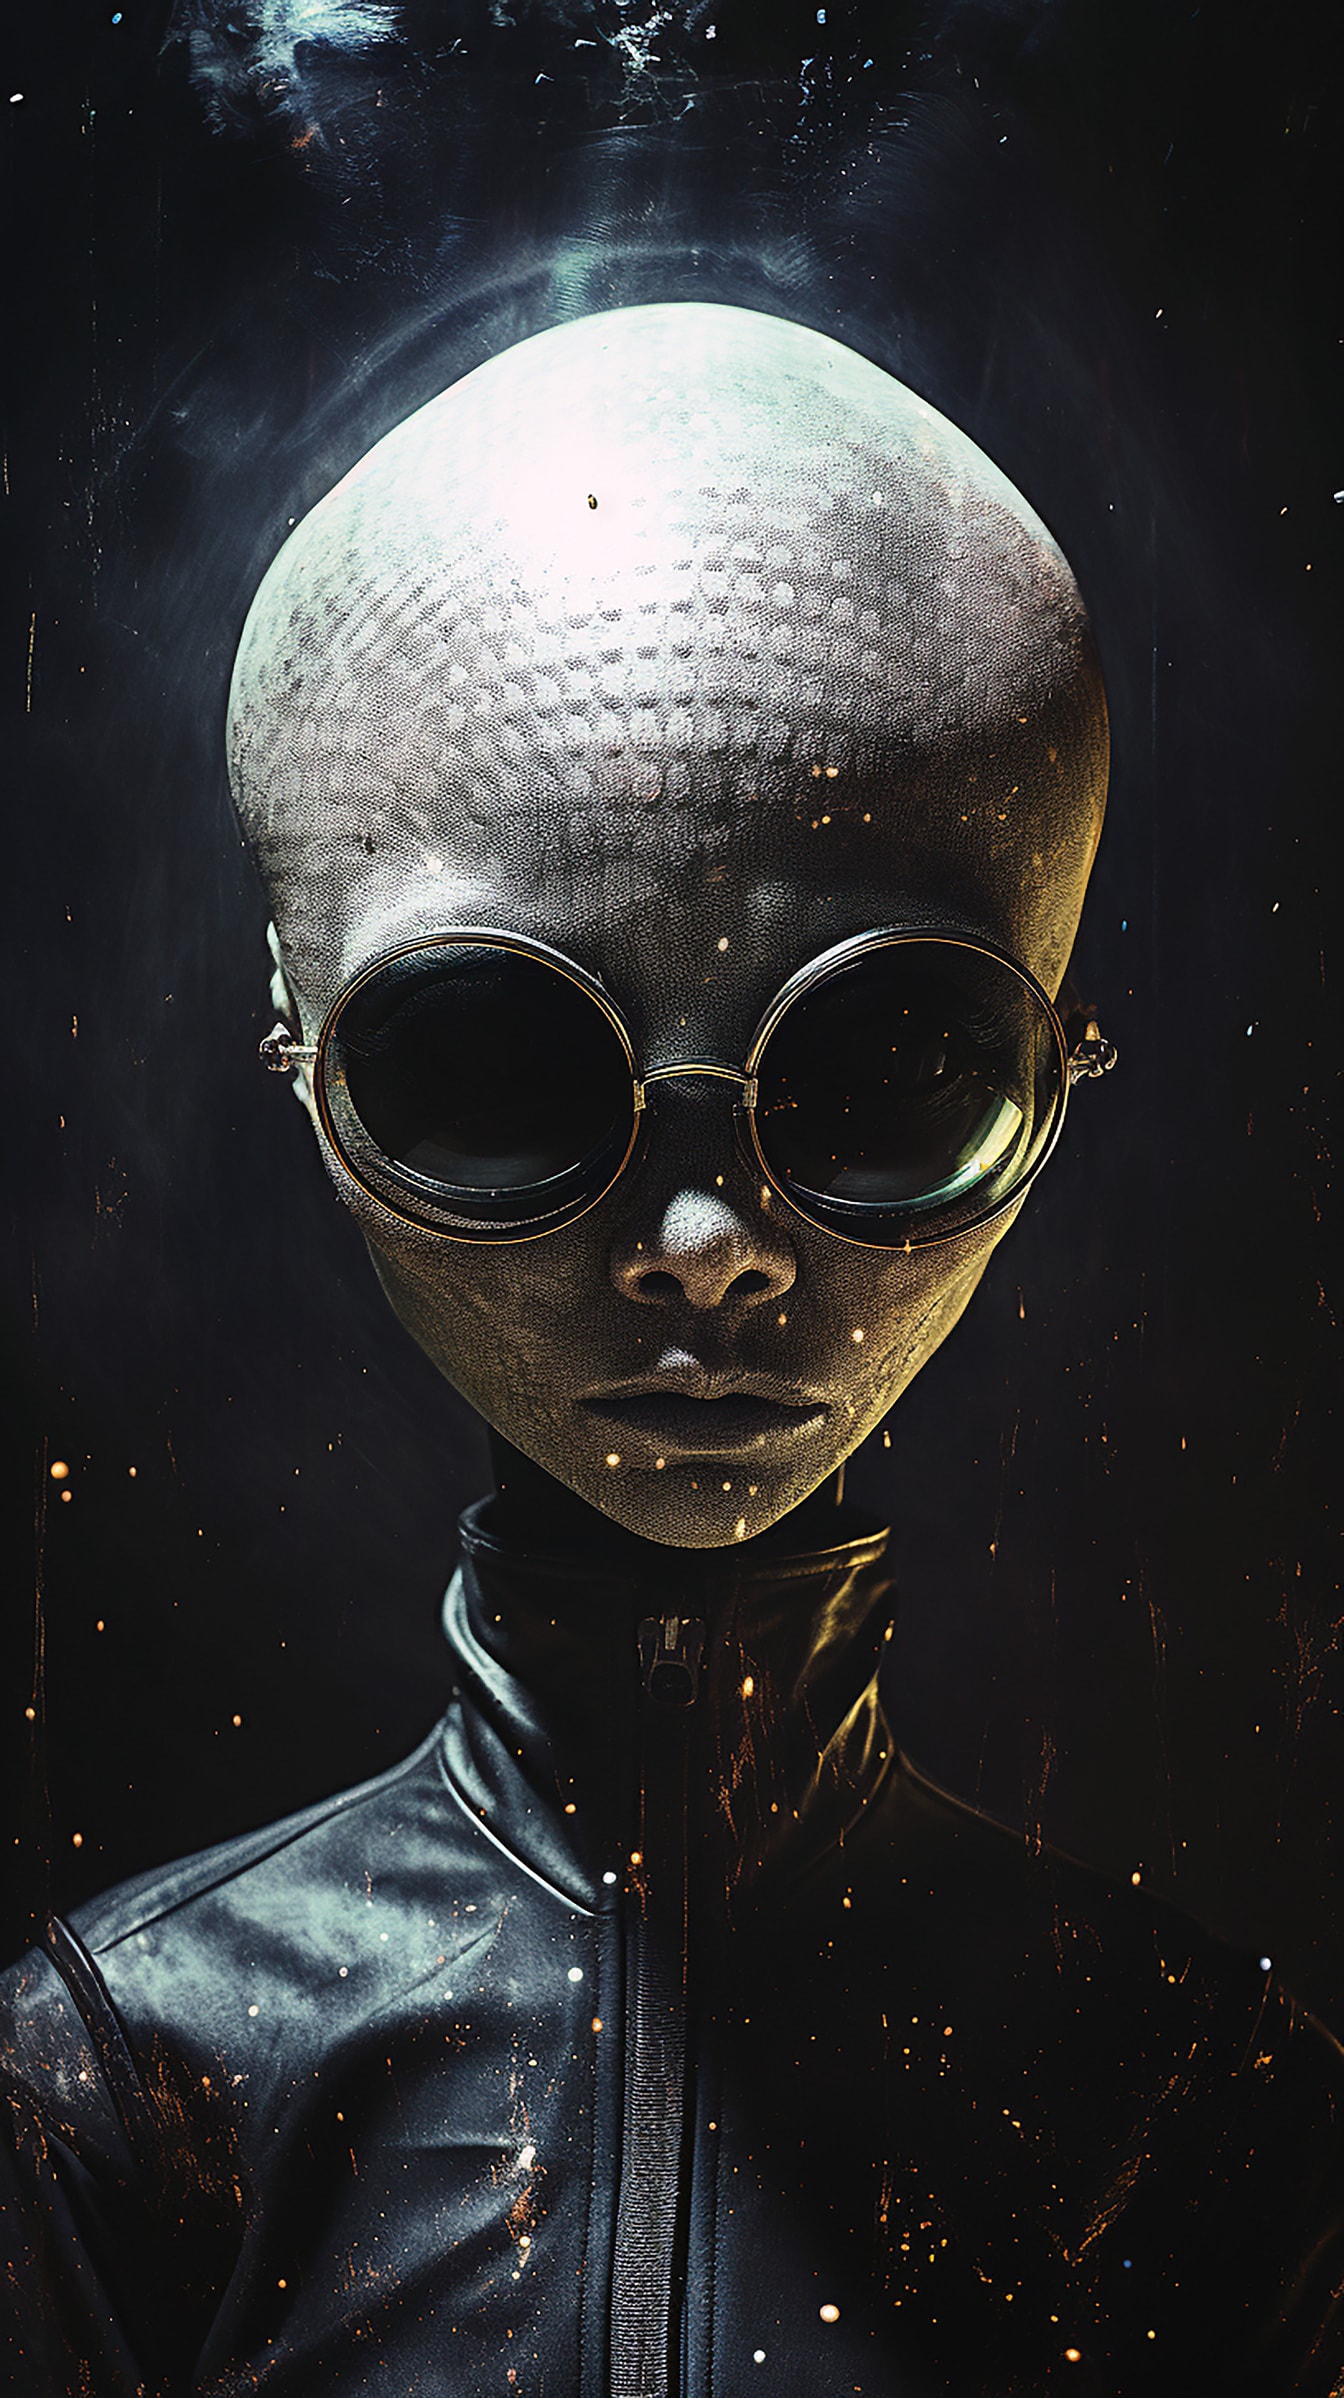 Potret alien humanoid dengan kacamata hitam dan jaket kulit